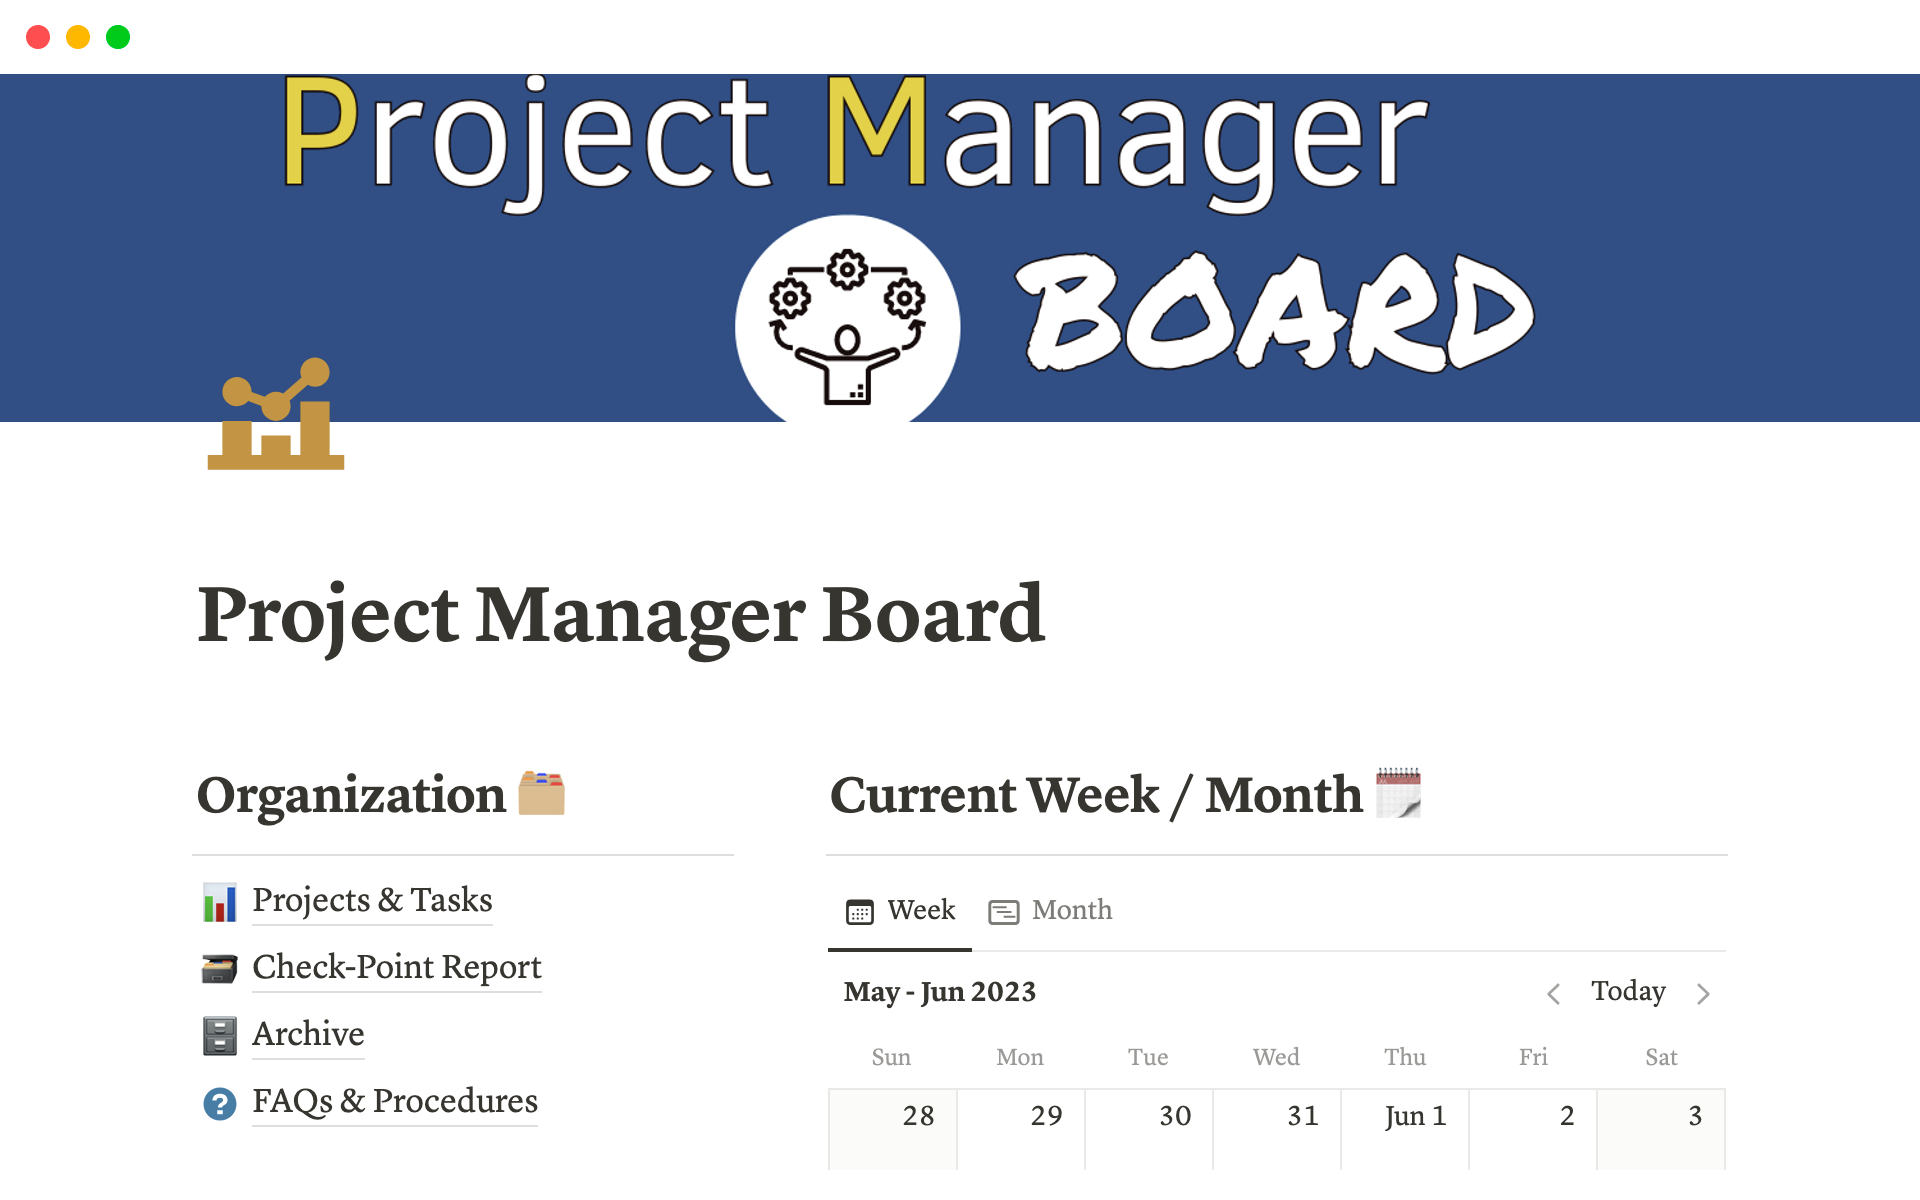 Vista previa de plantilla para Project Manager Board